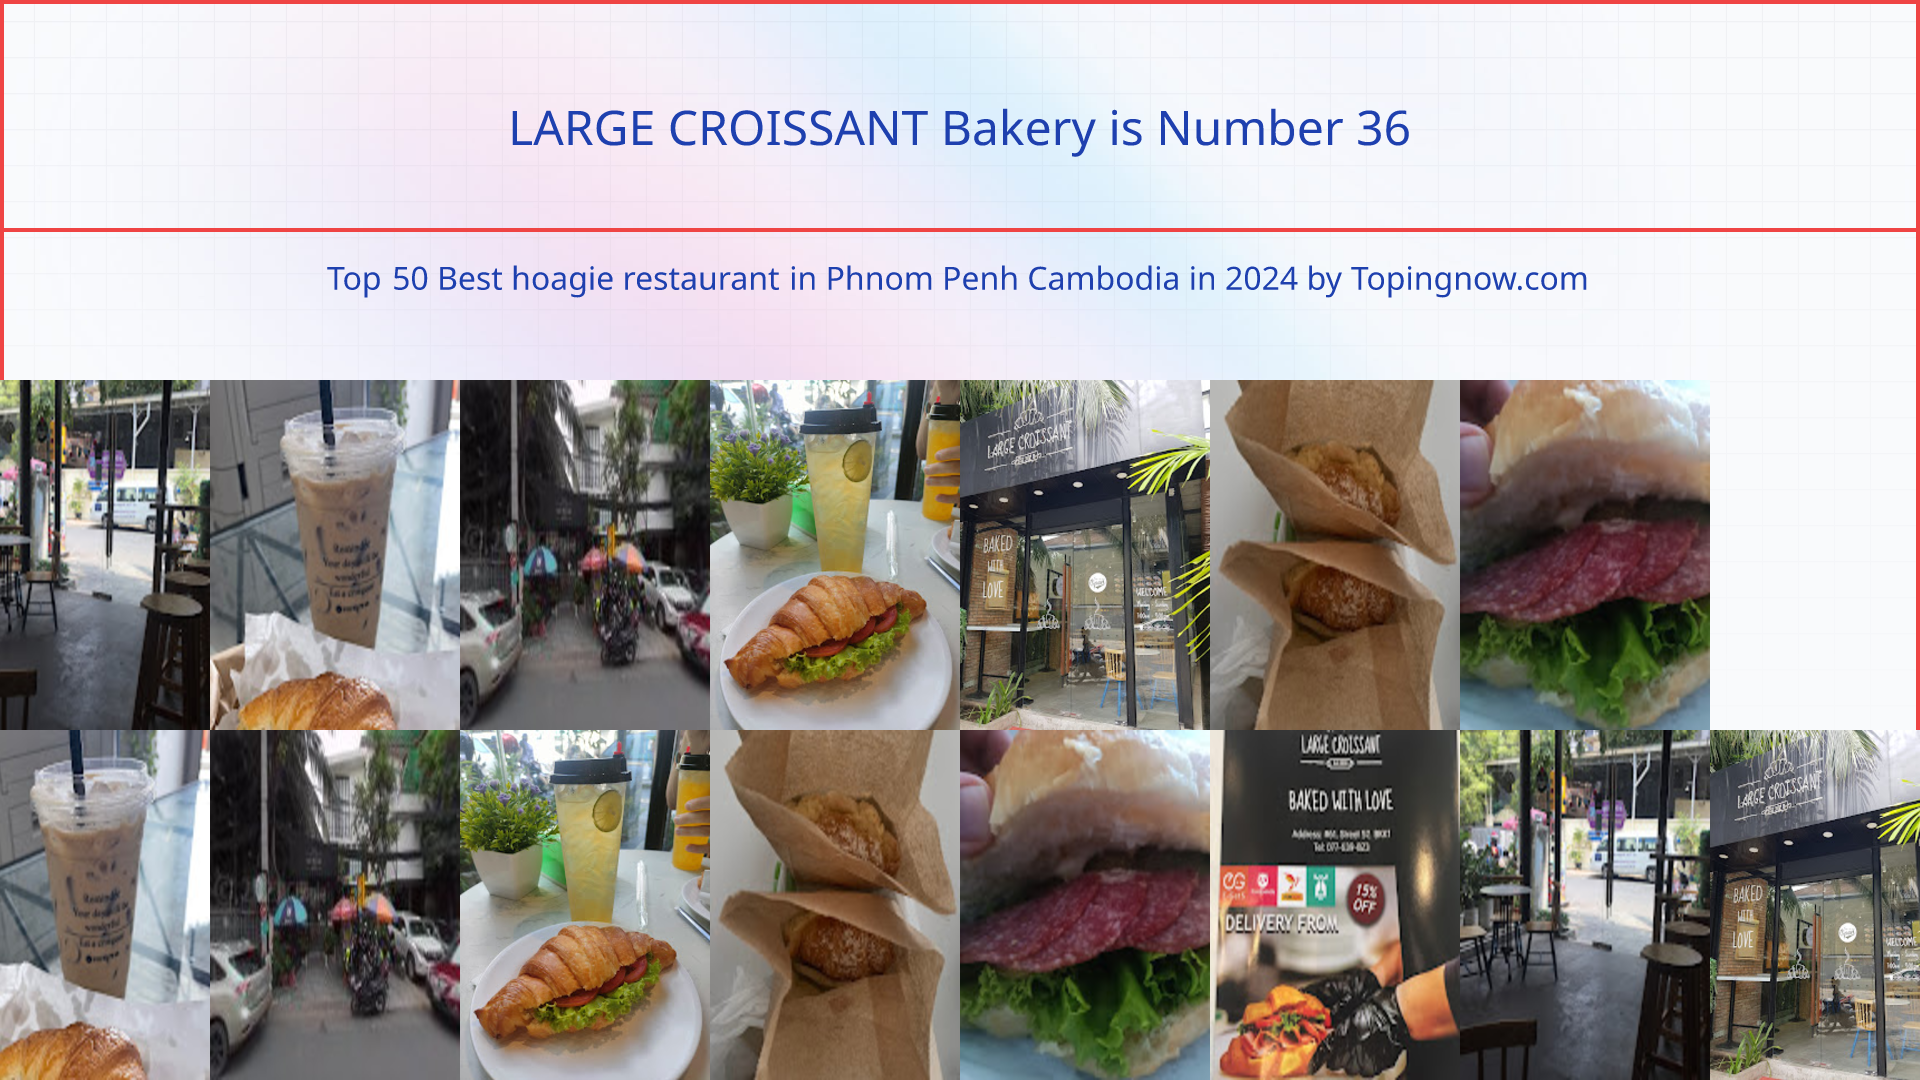 LARGE CROISSANT Bakery: Top 50 Best hoagie restaurant in Phnom Penh Cambodia in 2024